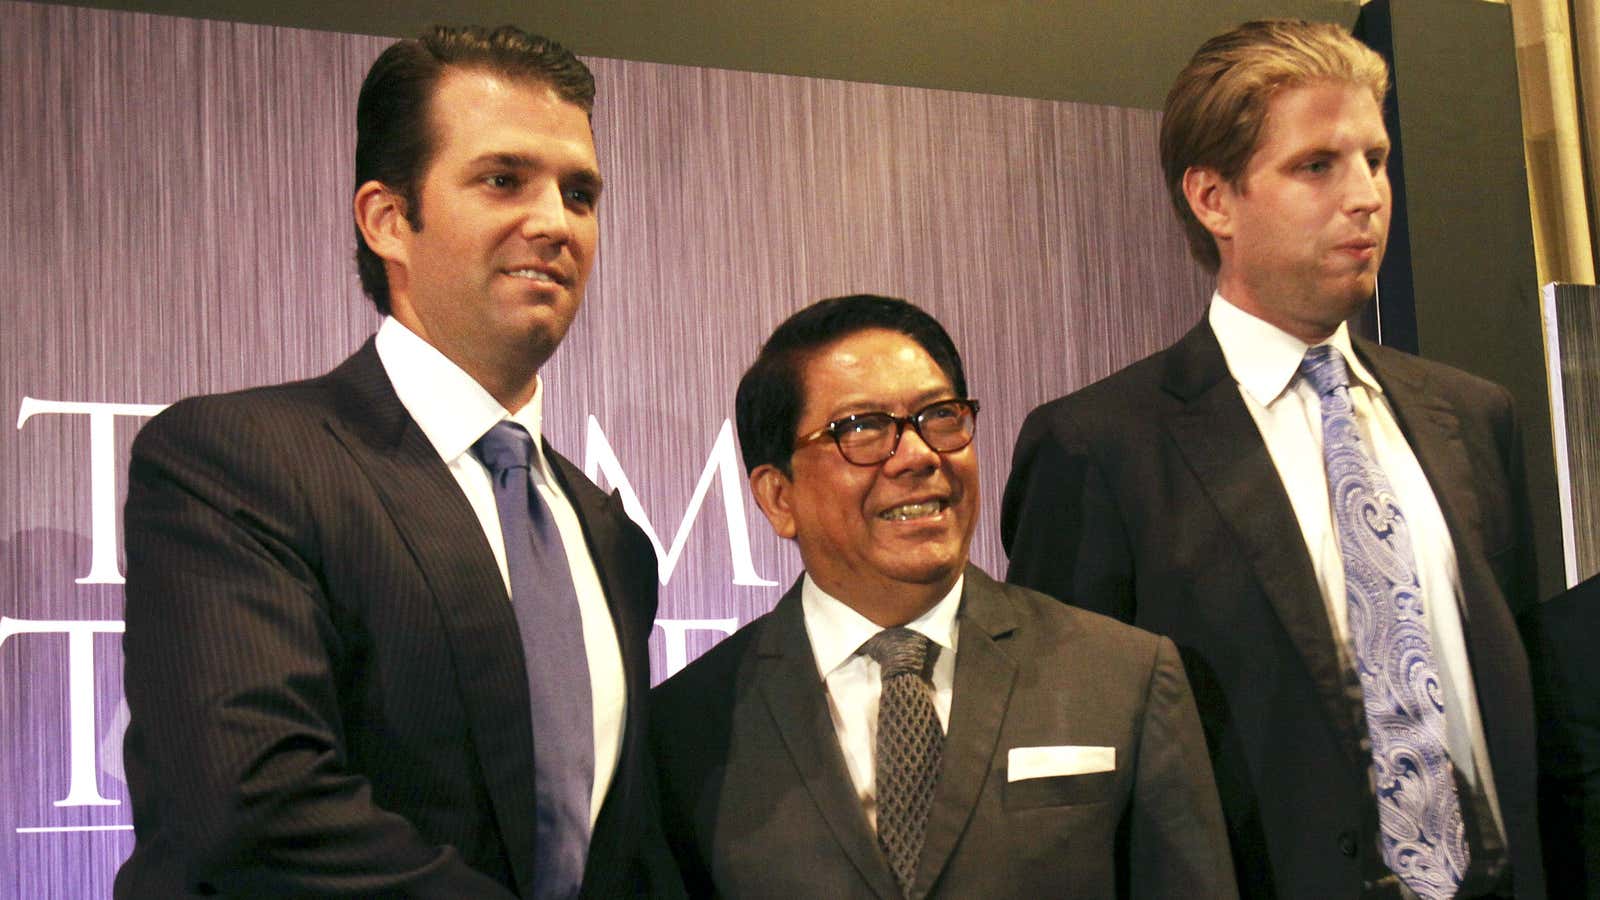 Donald Trump Jr. and Eric Trump with Jose E. B. Antonio, the Trump Organization’s business partner in the Philippines.